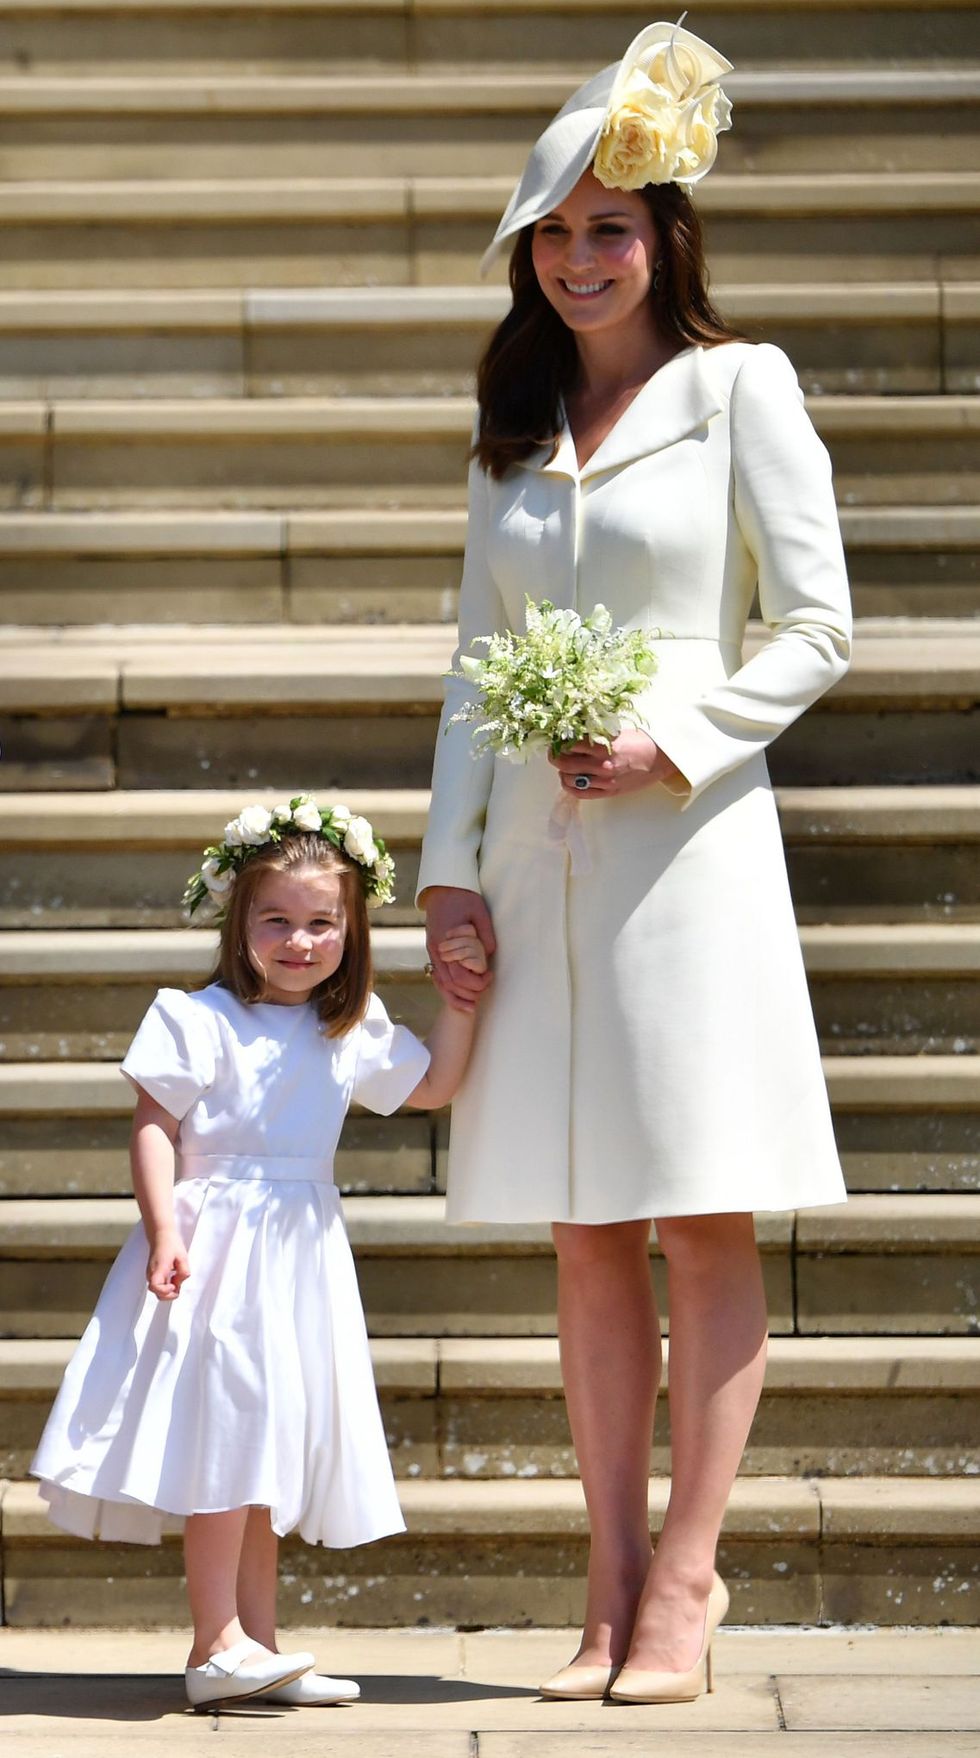 Why Kate Middleton Wore White to the Royal Wedding - In Defense of Middleton's Royal Wedding Outfit